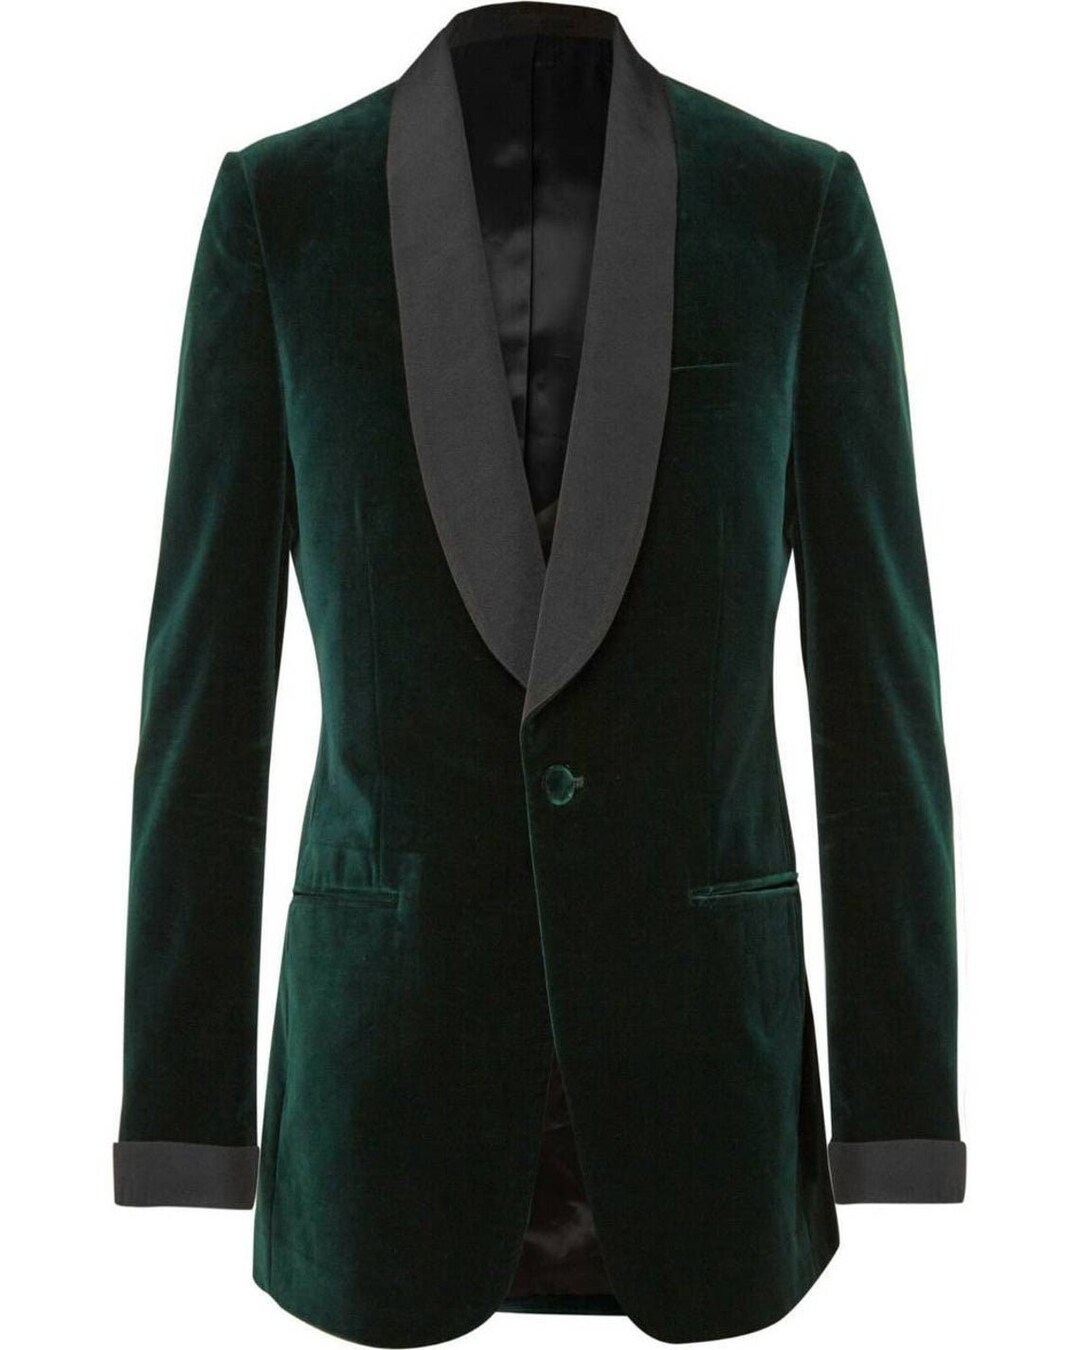 Men's Green Slim Fit Party Wear Wedding Outfit Long Tuxedo - Etsy